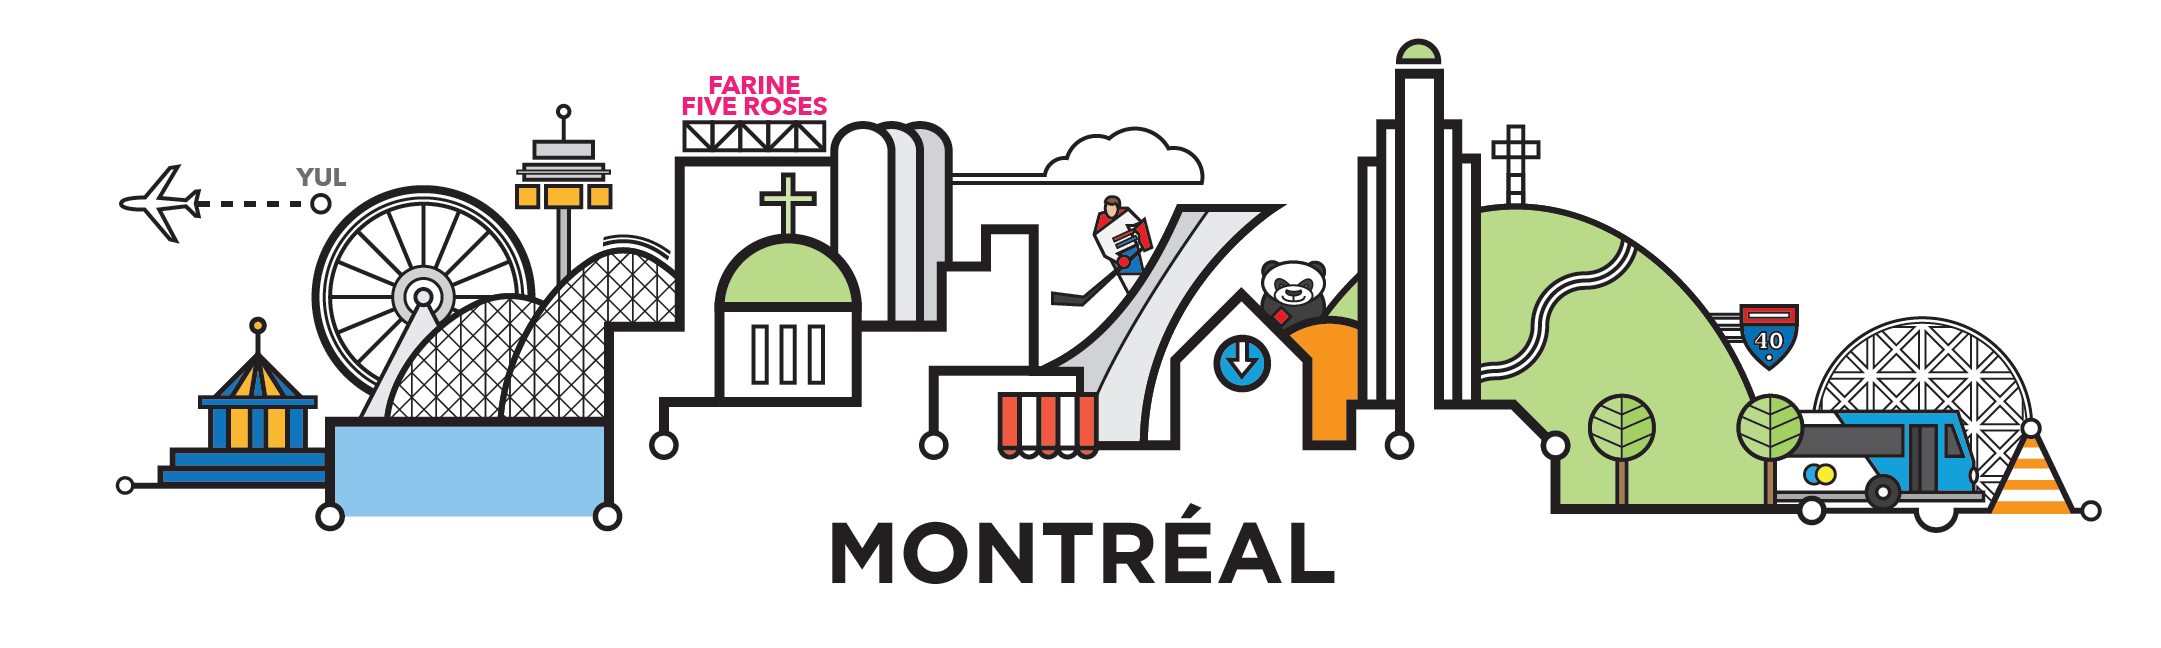 montreal-cityline-illustration-by-loogart